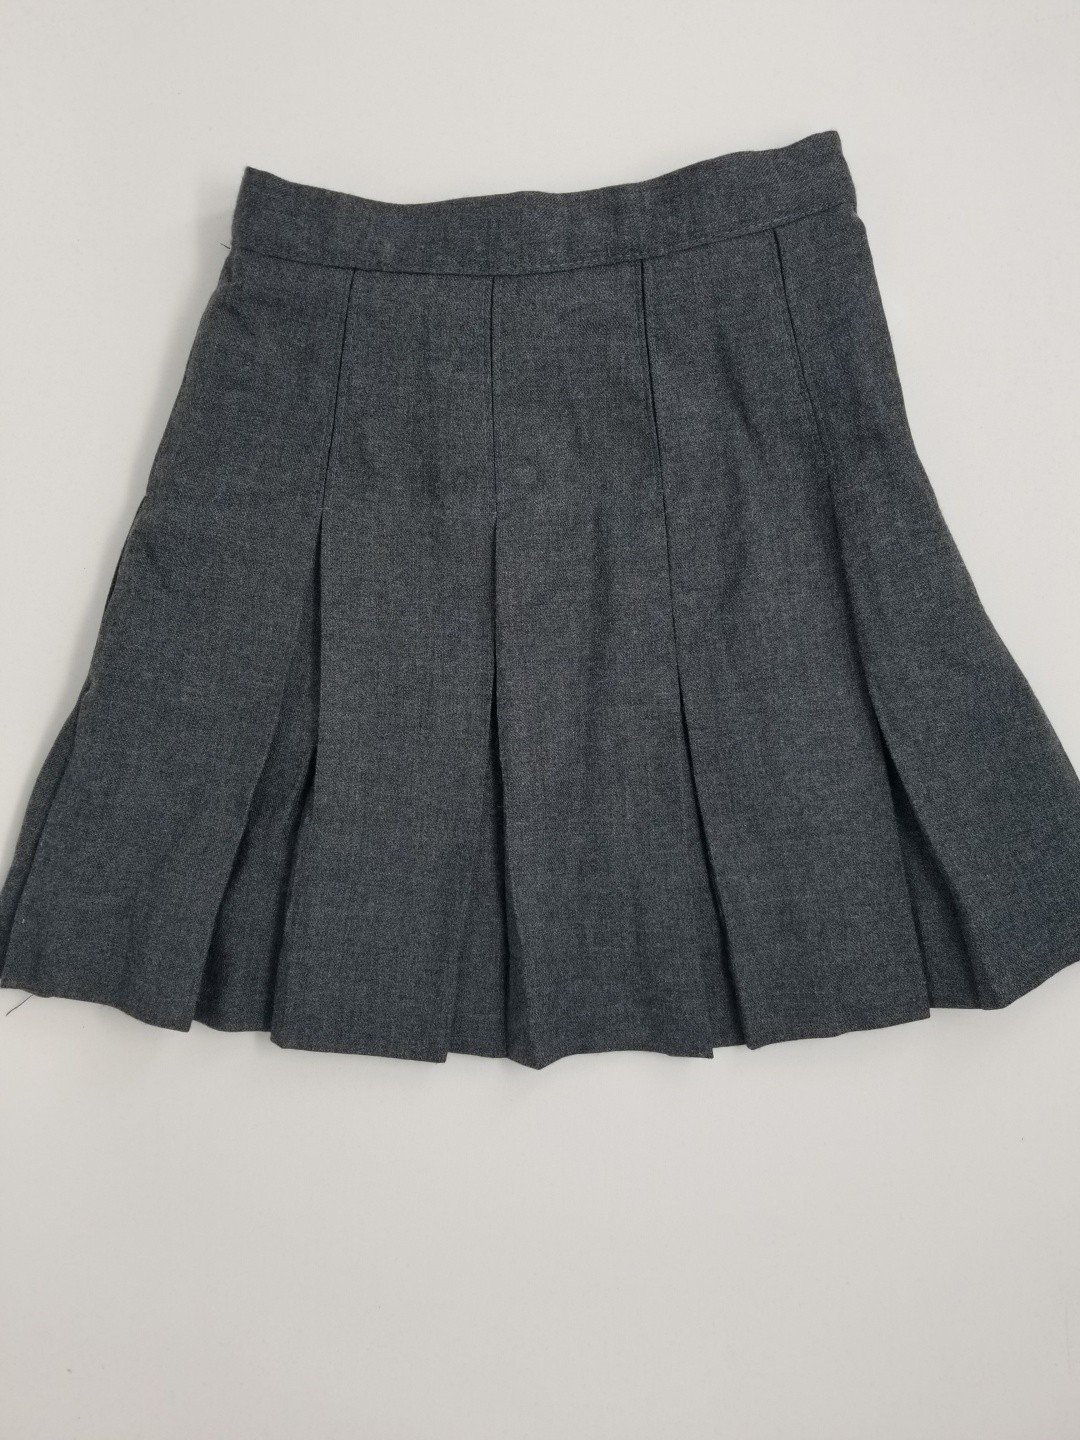 Stitch Down Pleat Skirt- Style 11-Plaid 16